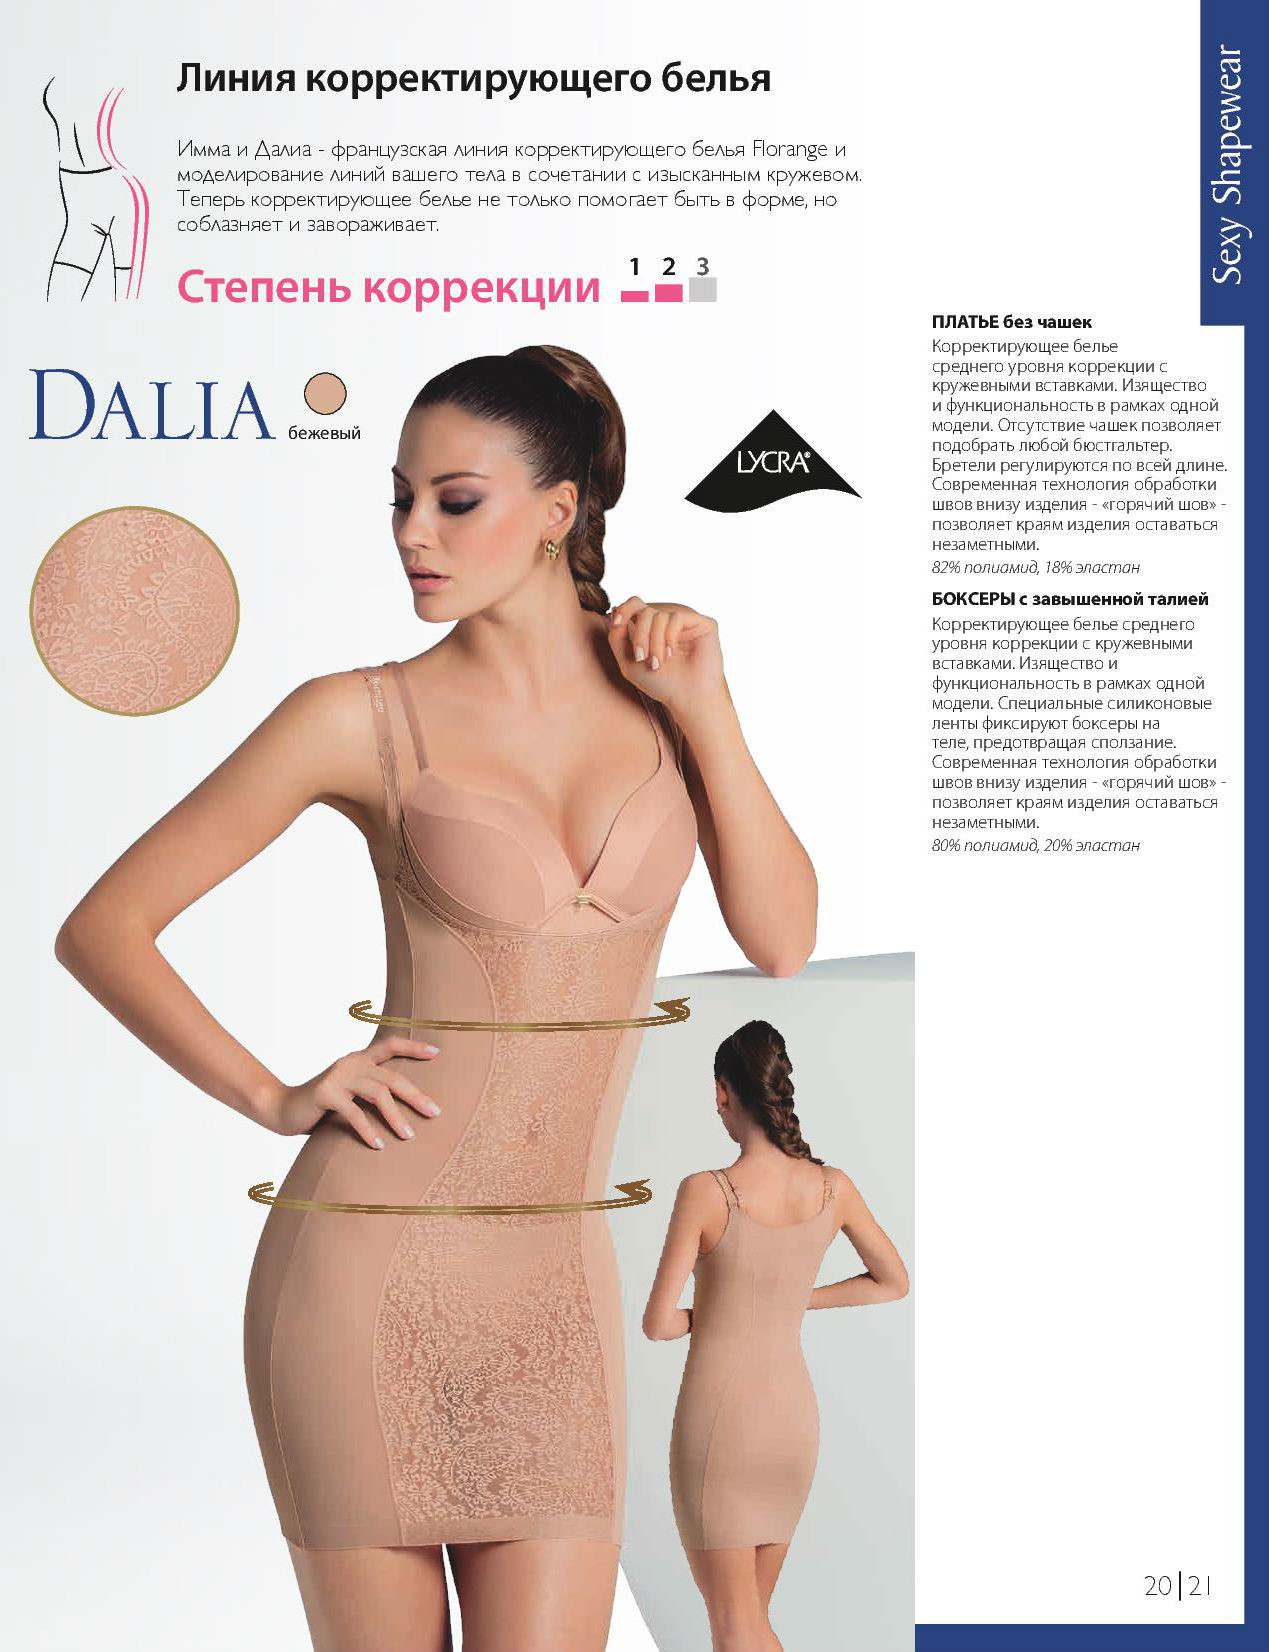 Корректирующее бельё Флоранж боксеры, платье "Далиа"